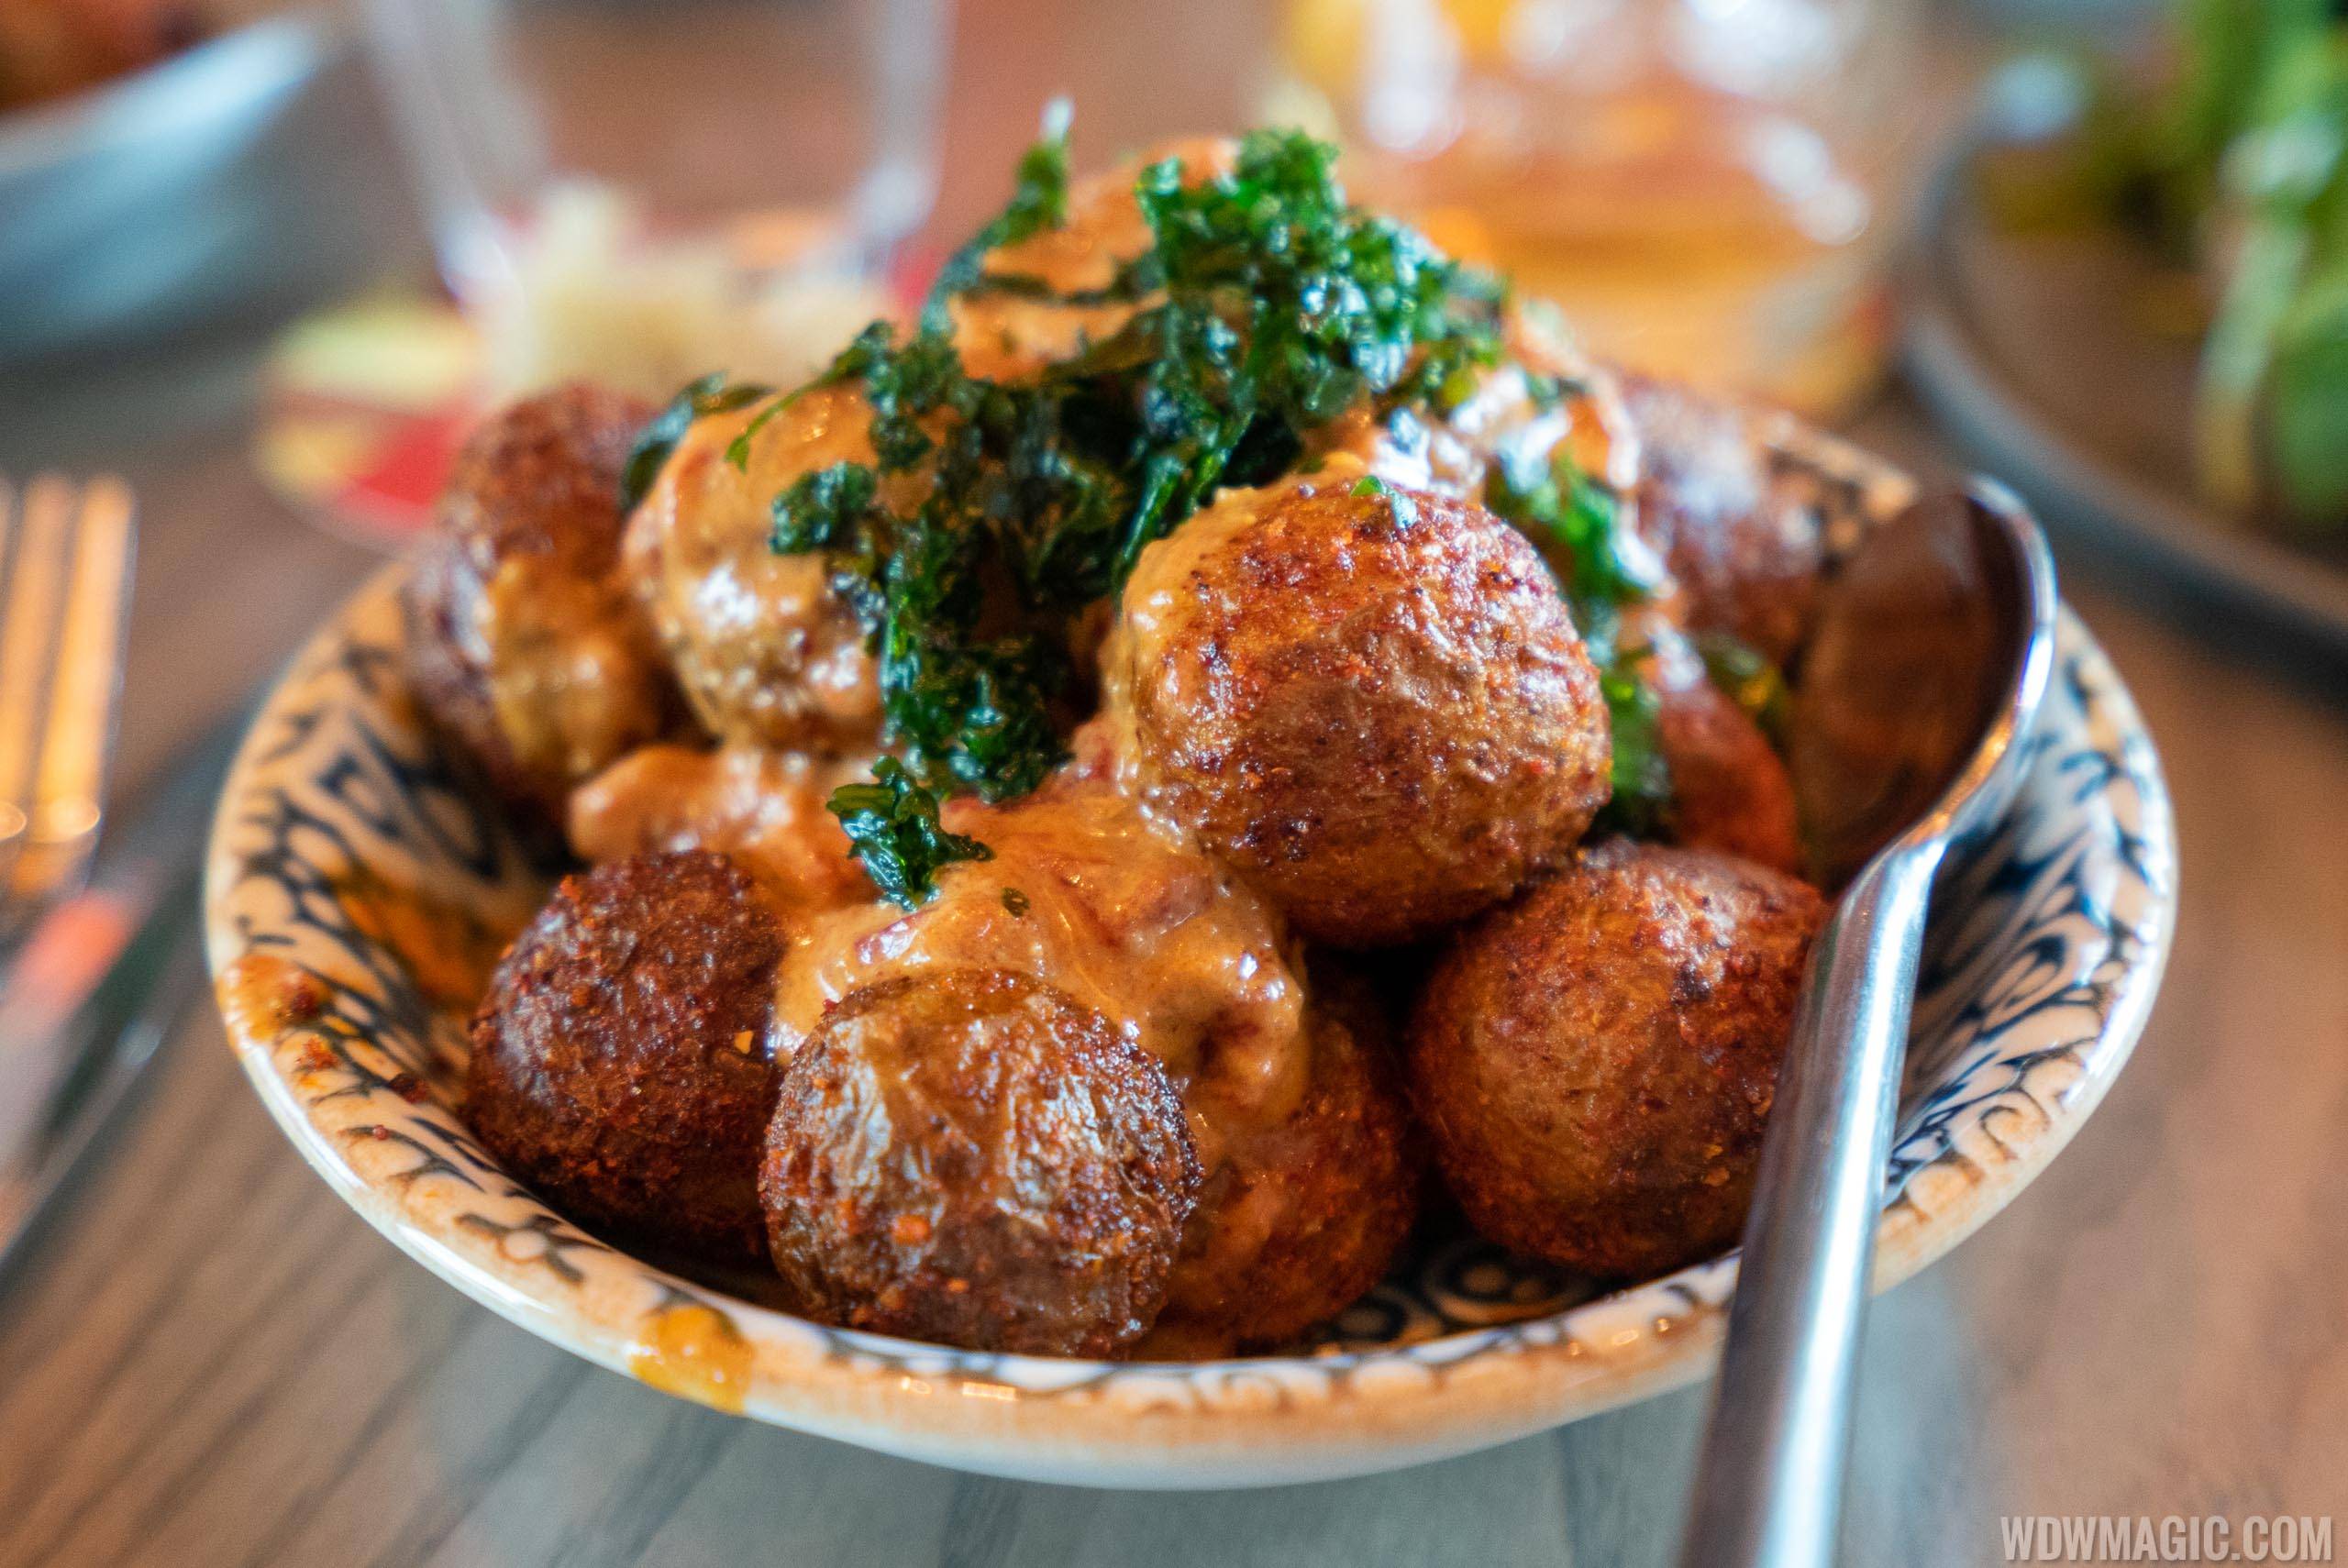 Toledo - 'Bravas' Potatoes